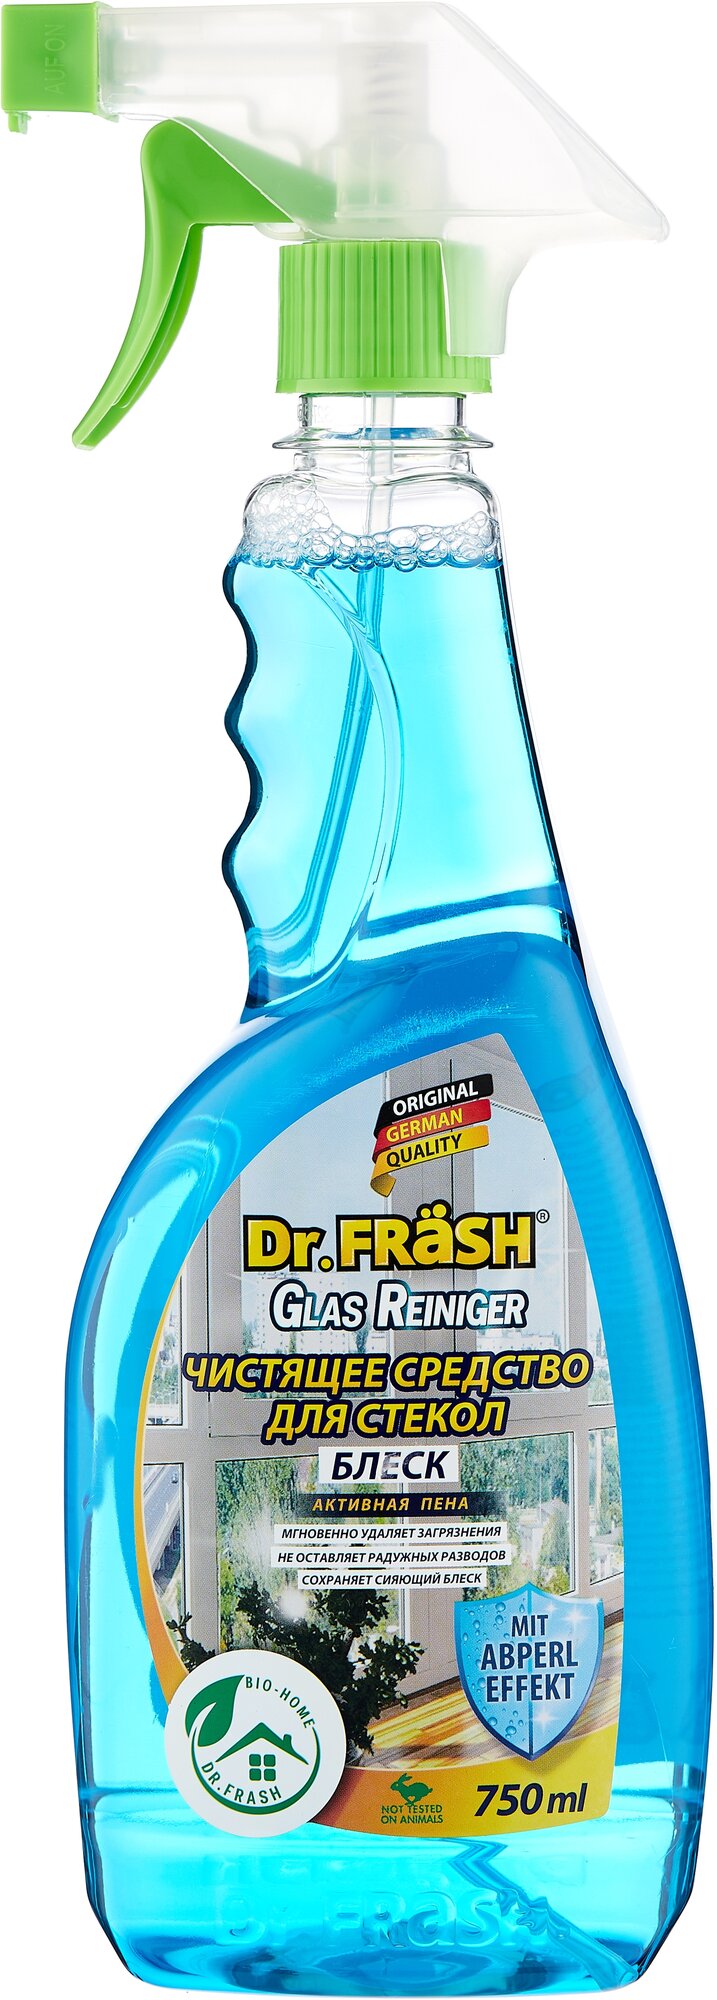 Dr.FRASH Чистящее средство для стекол "блеск", 750 мл - фотография № 1